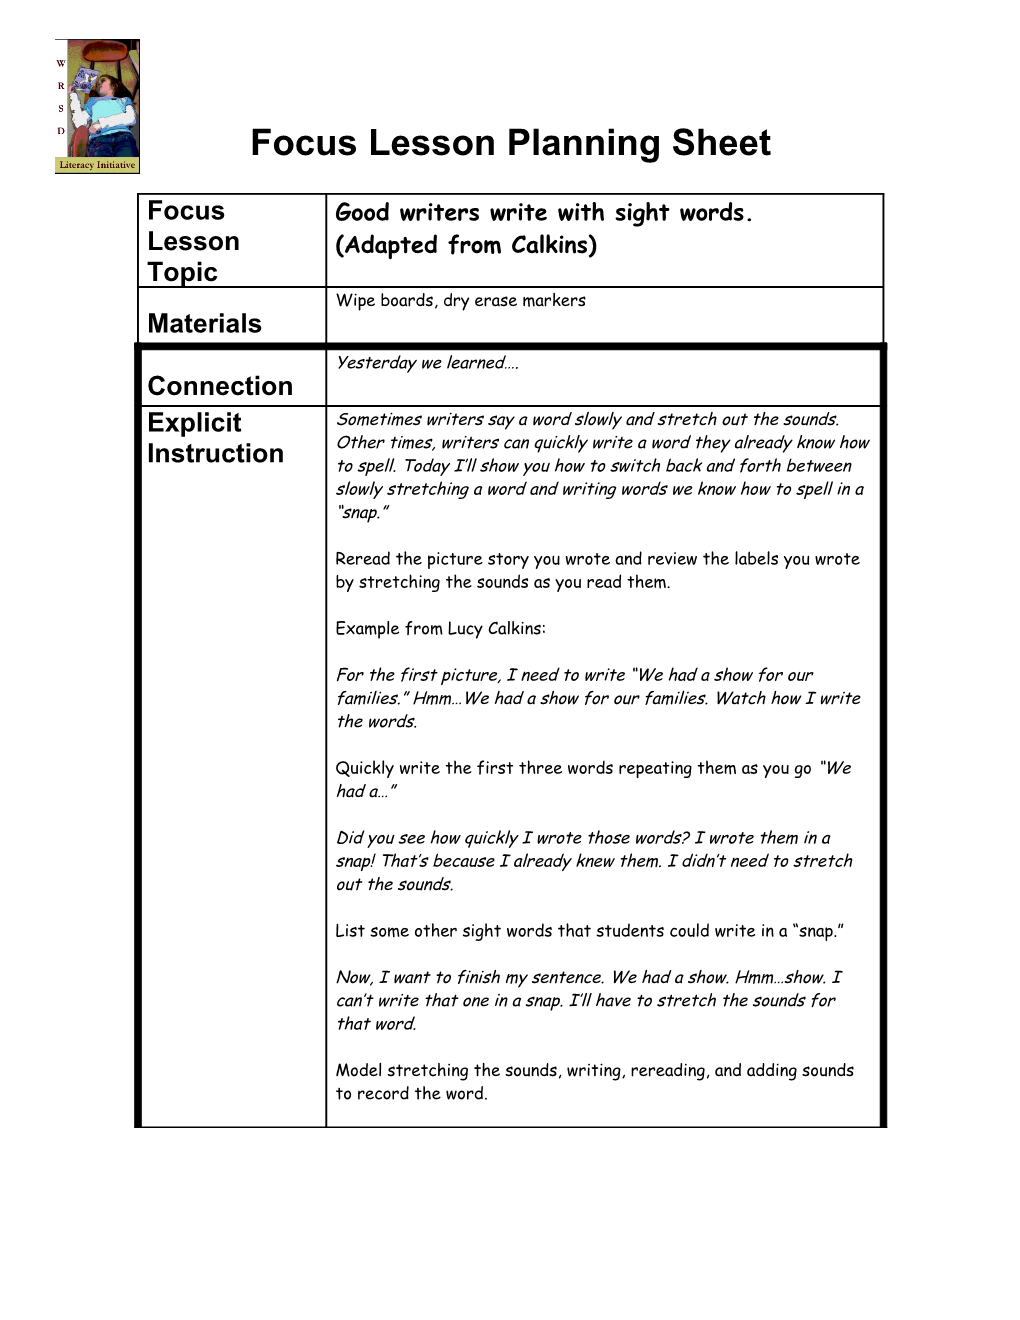 Focus Lesson Planning Sheet s5